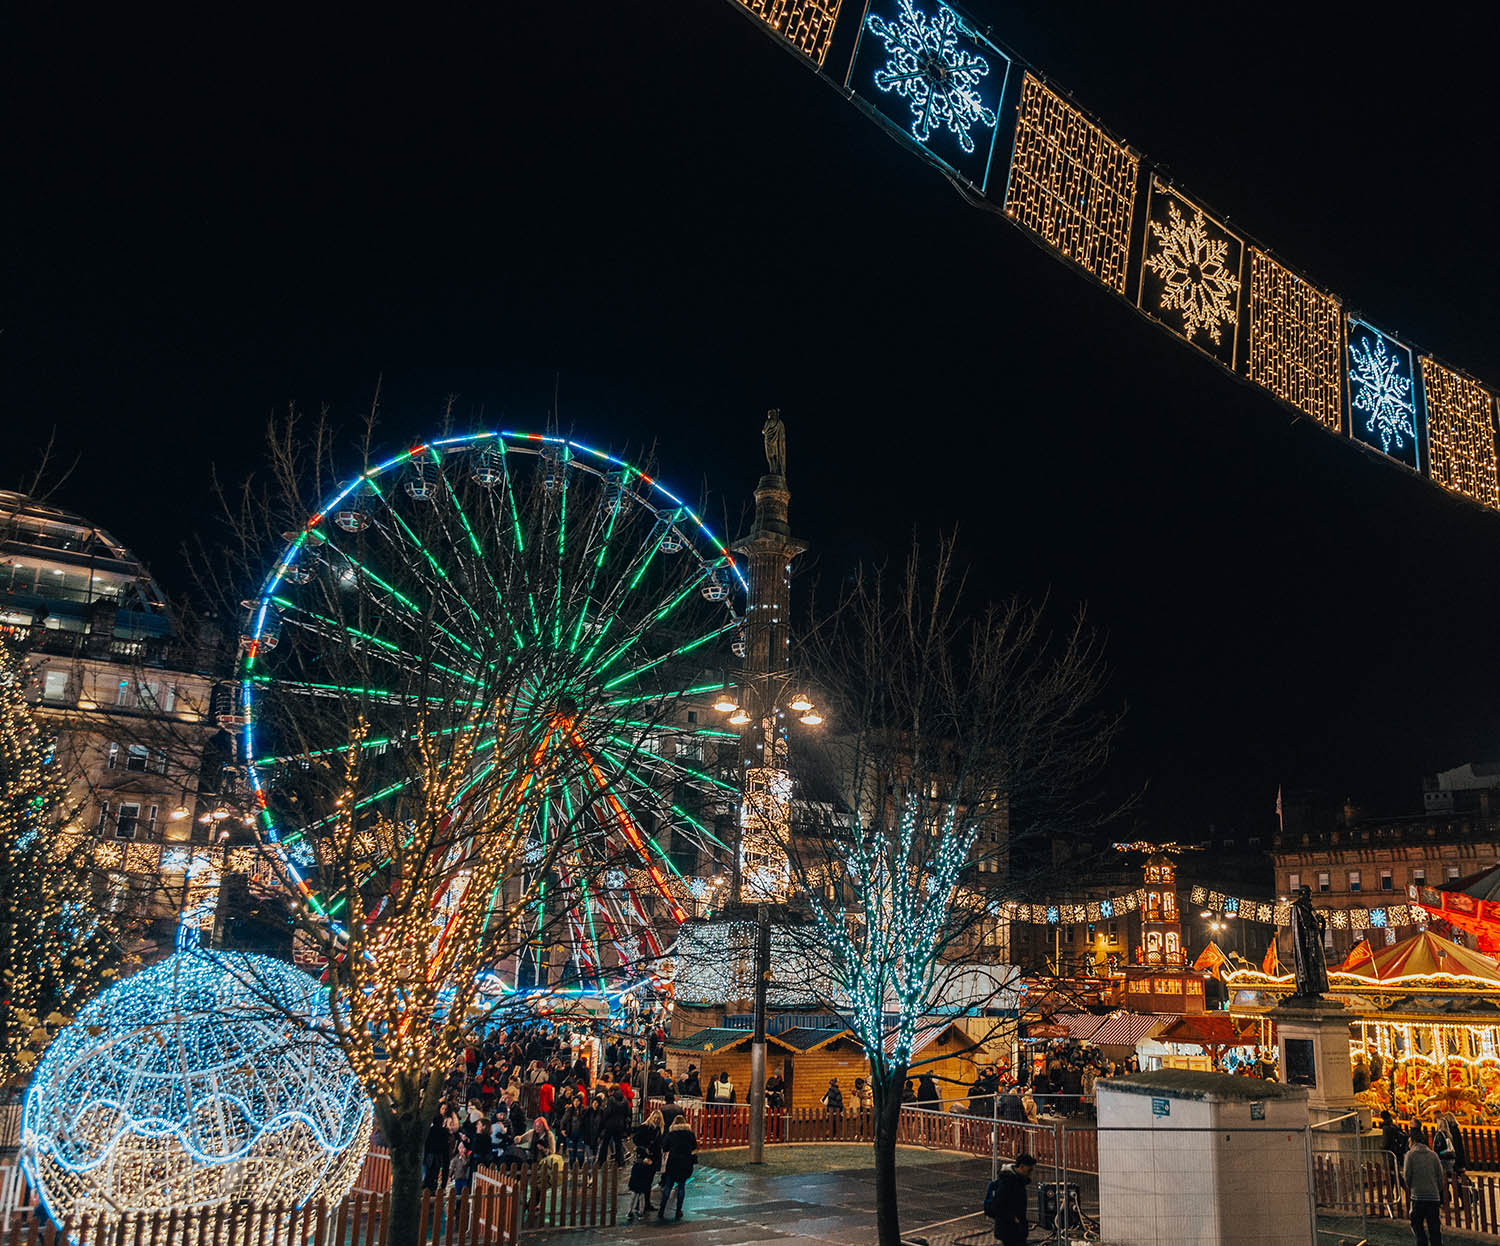 Glasgow Christmas Market by night